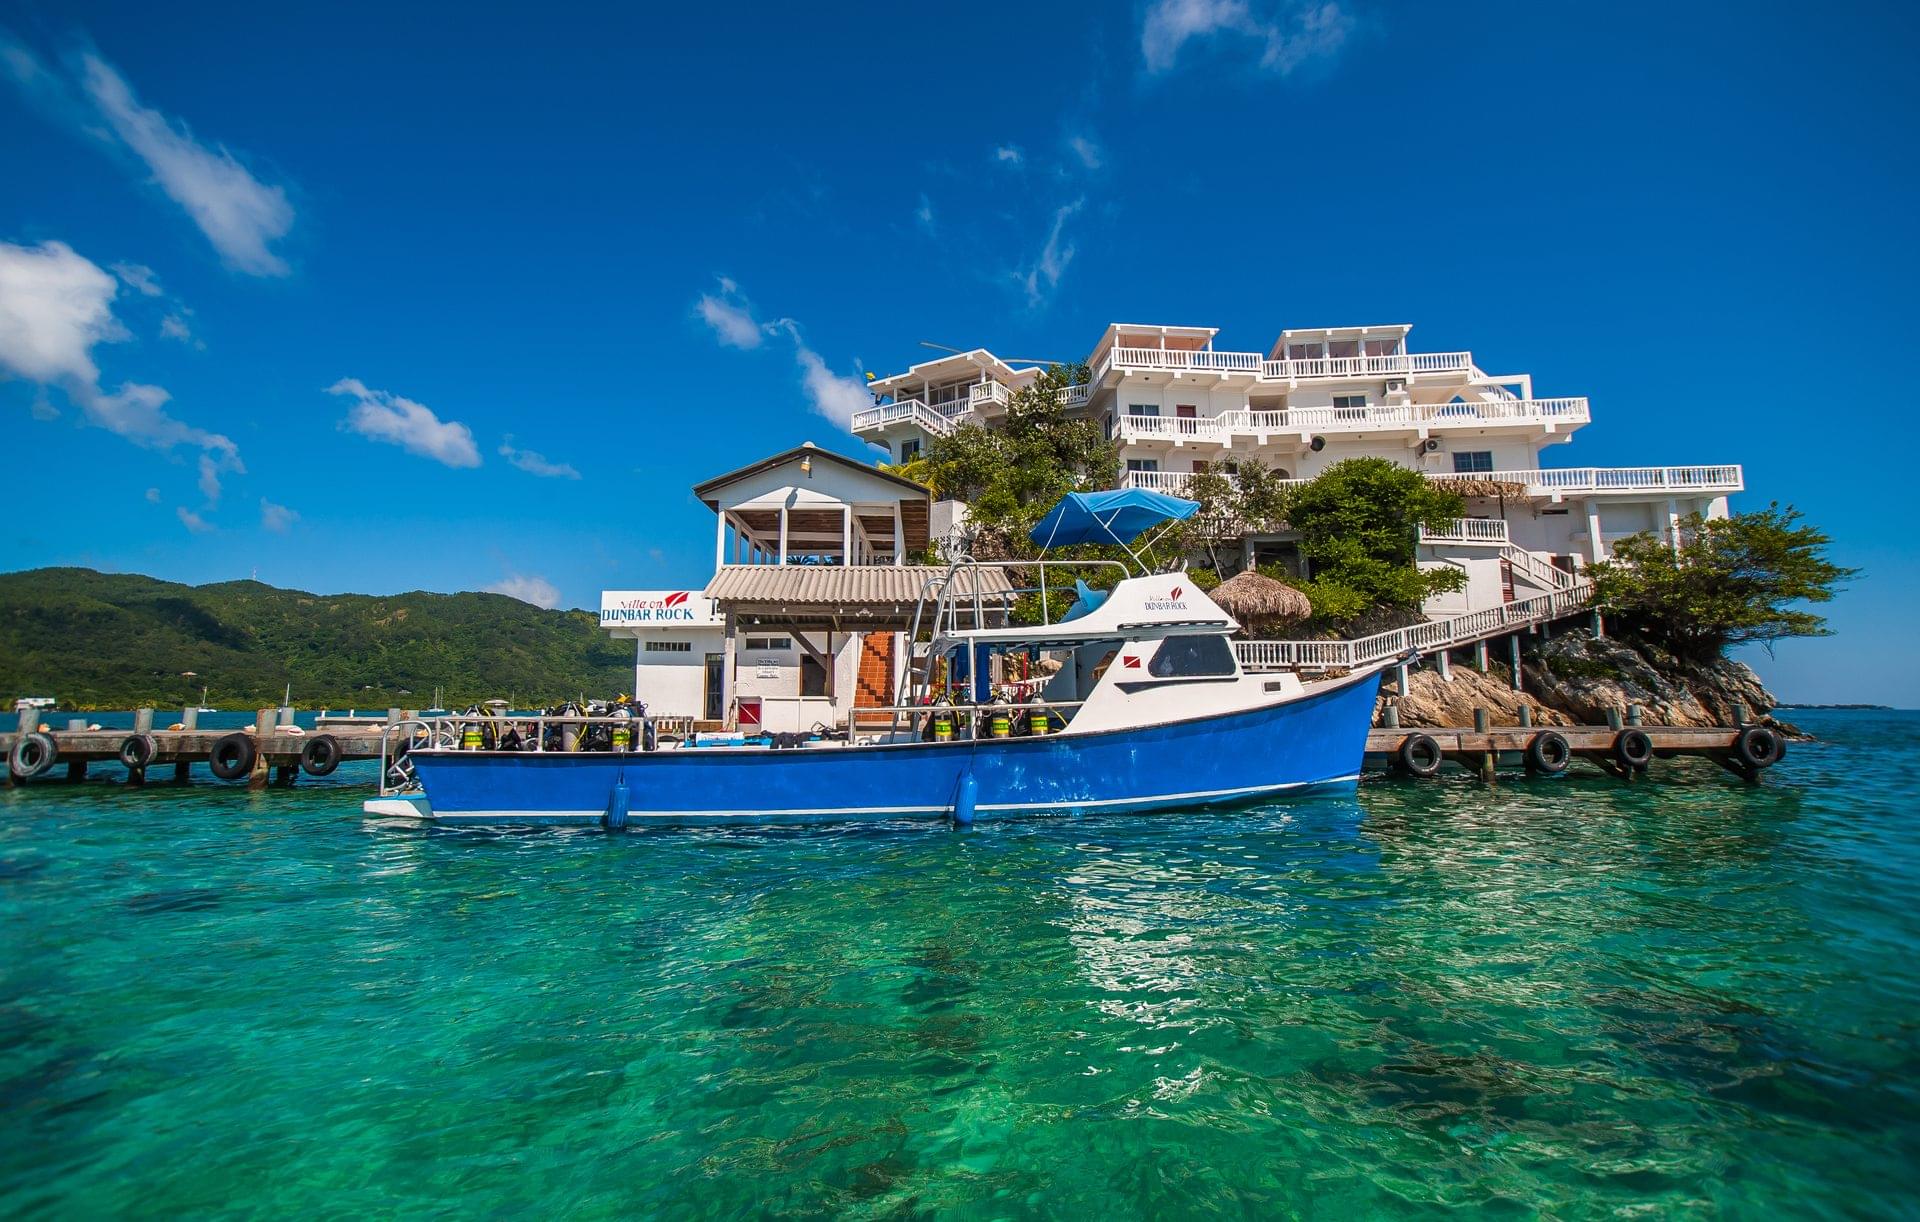 best house reefs dunbar rock villa with boat